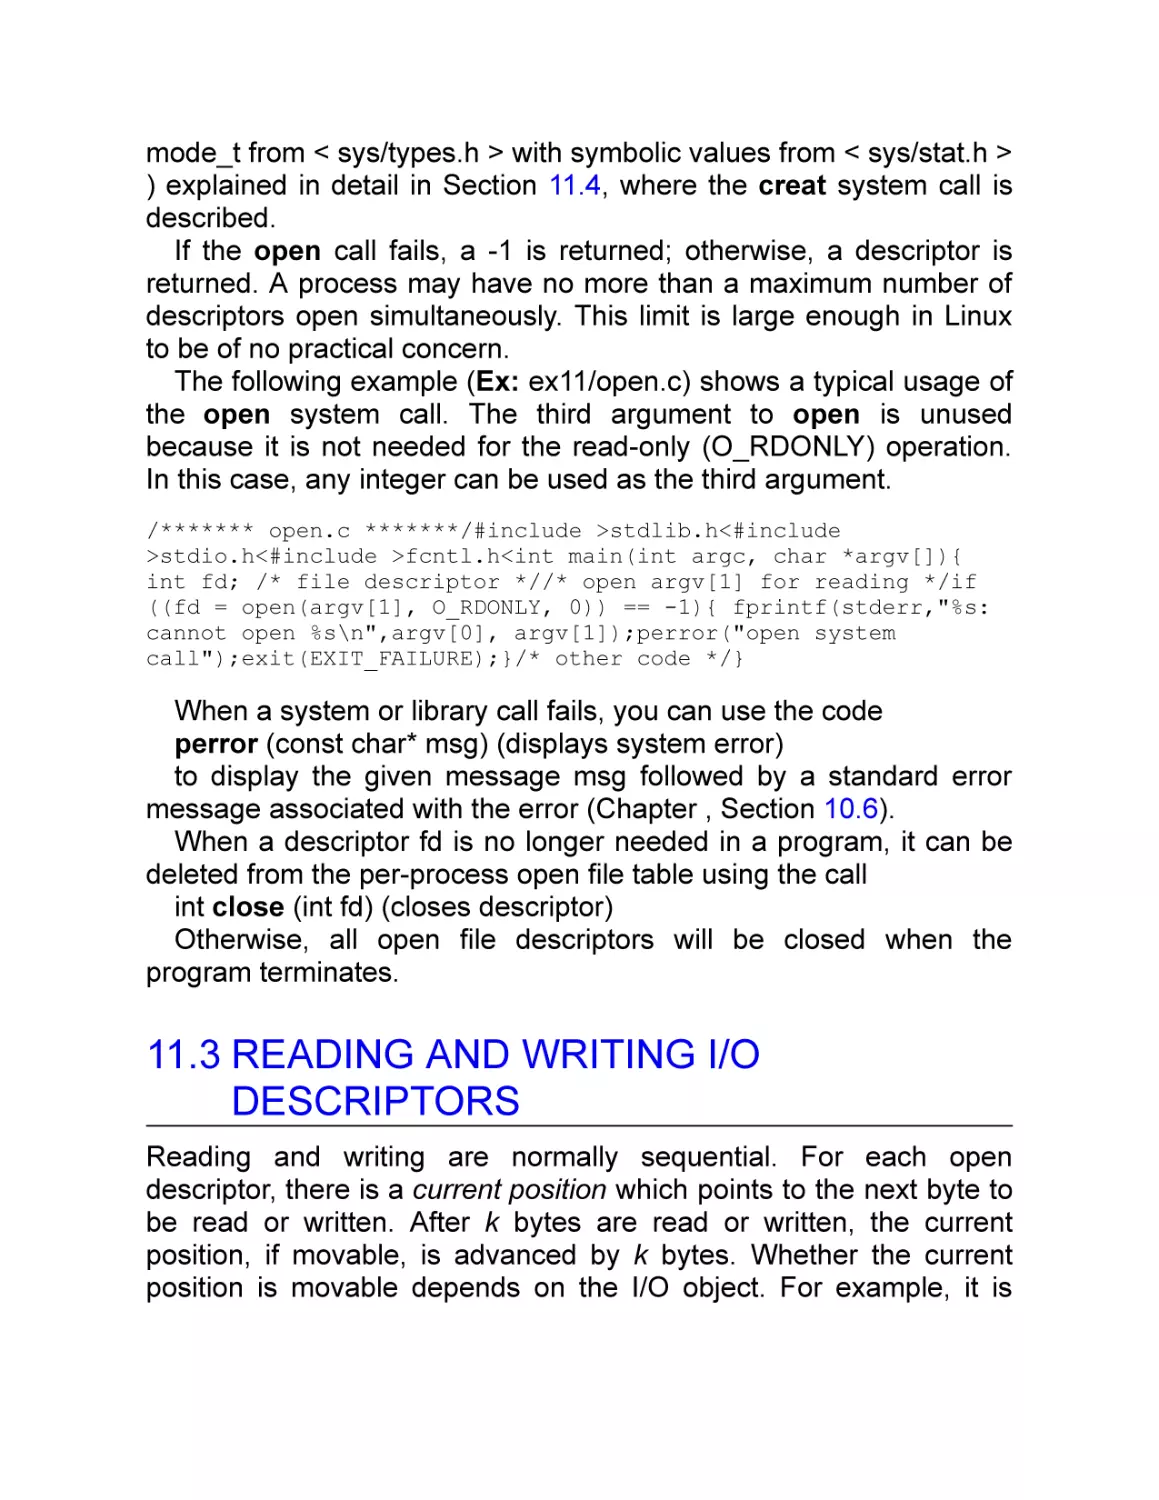 11.3 Reading and Writing I/O Descriptors